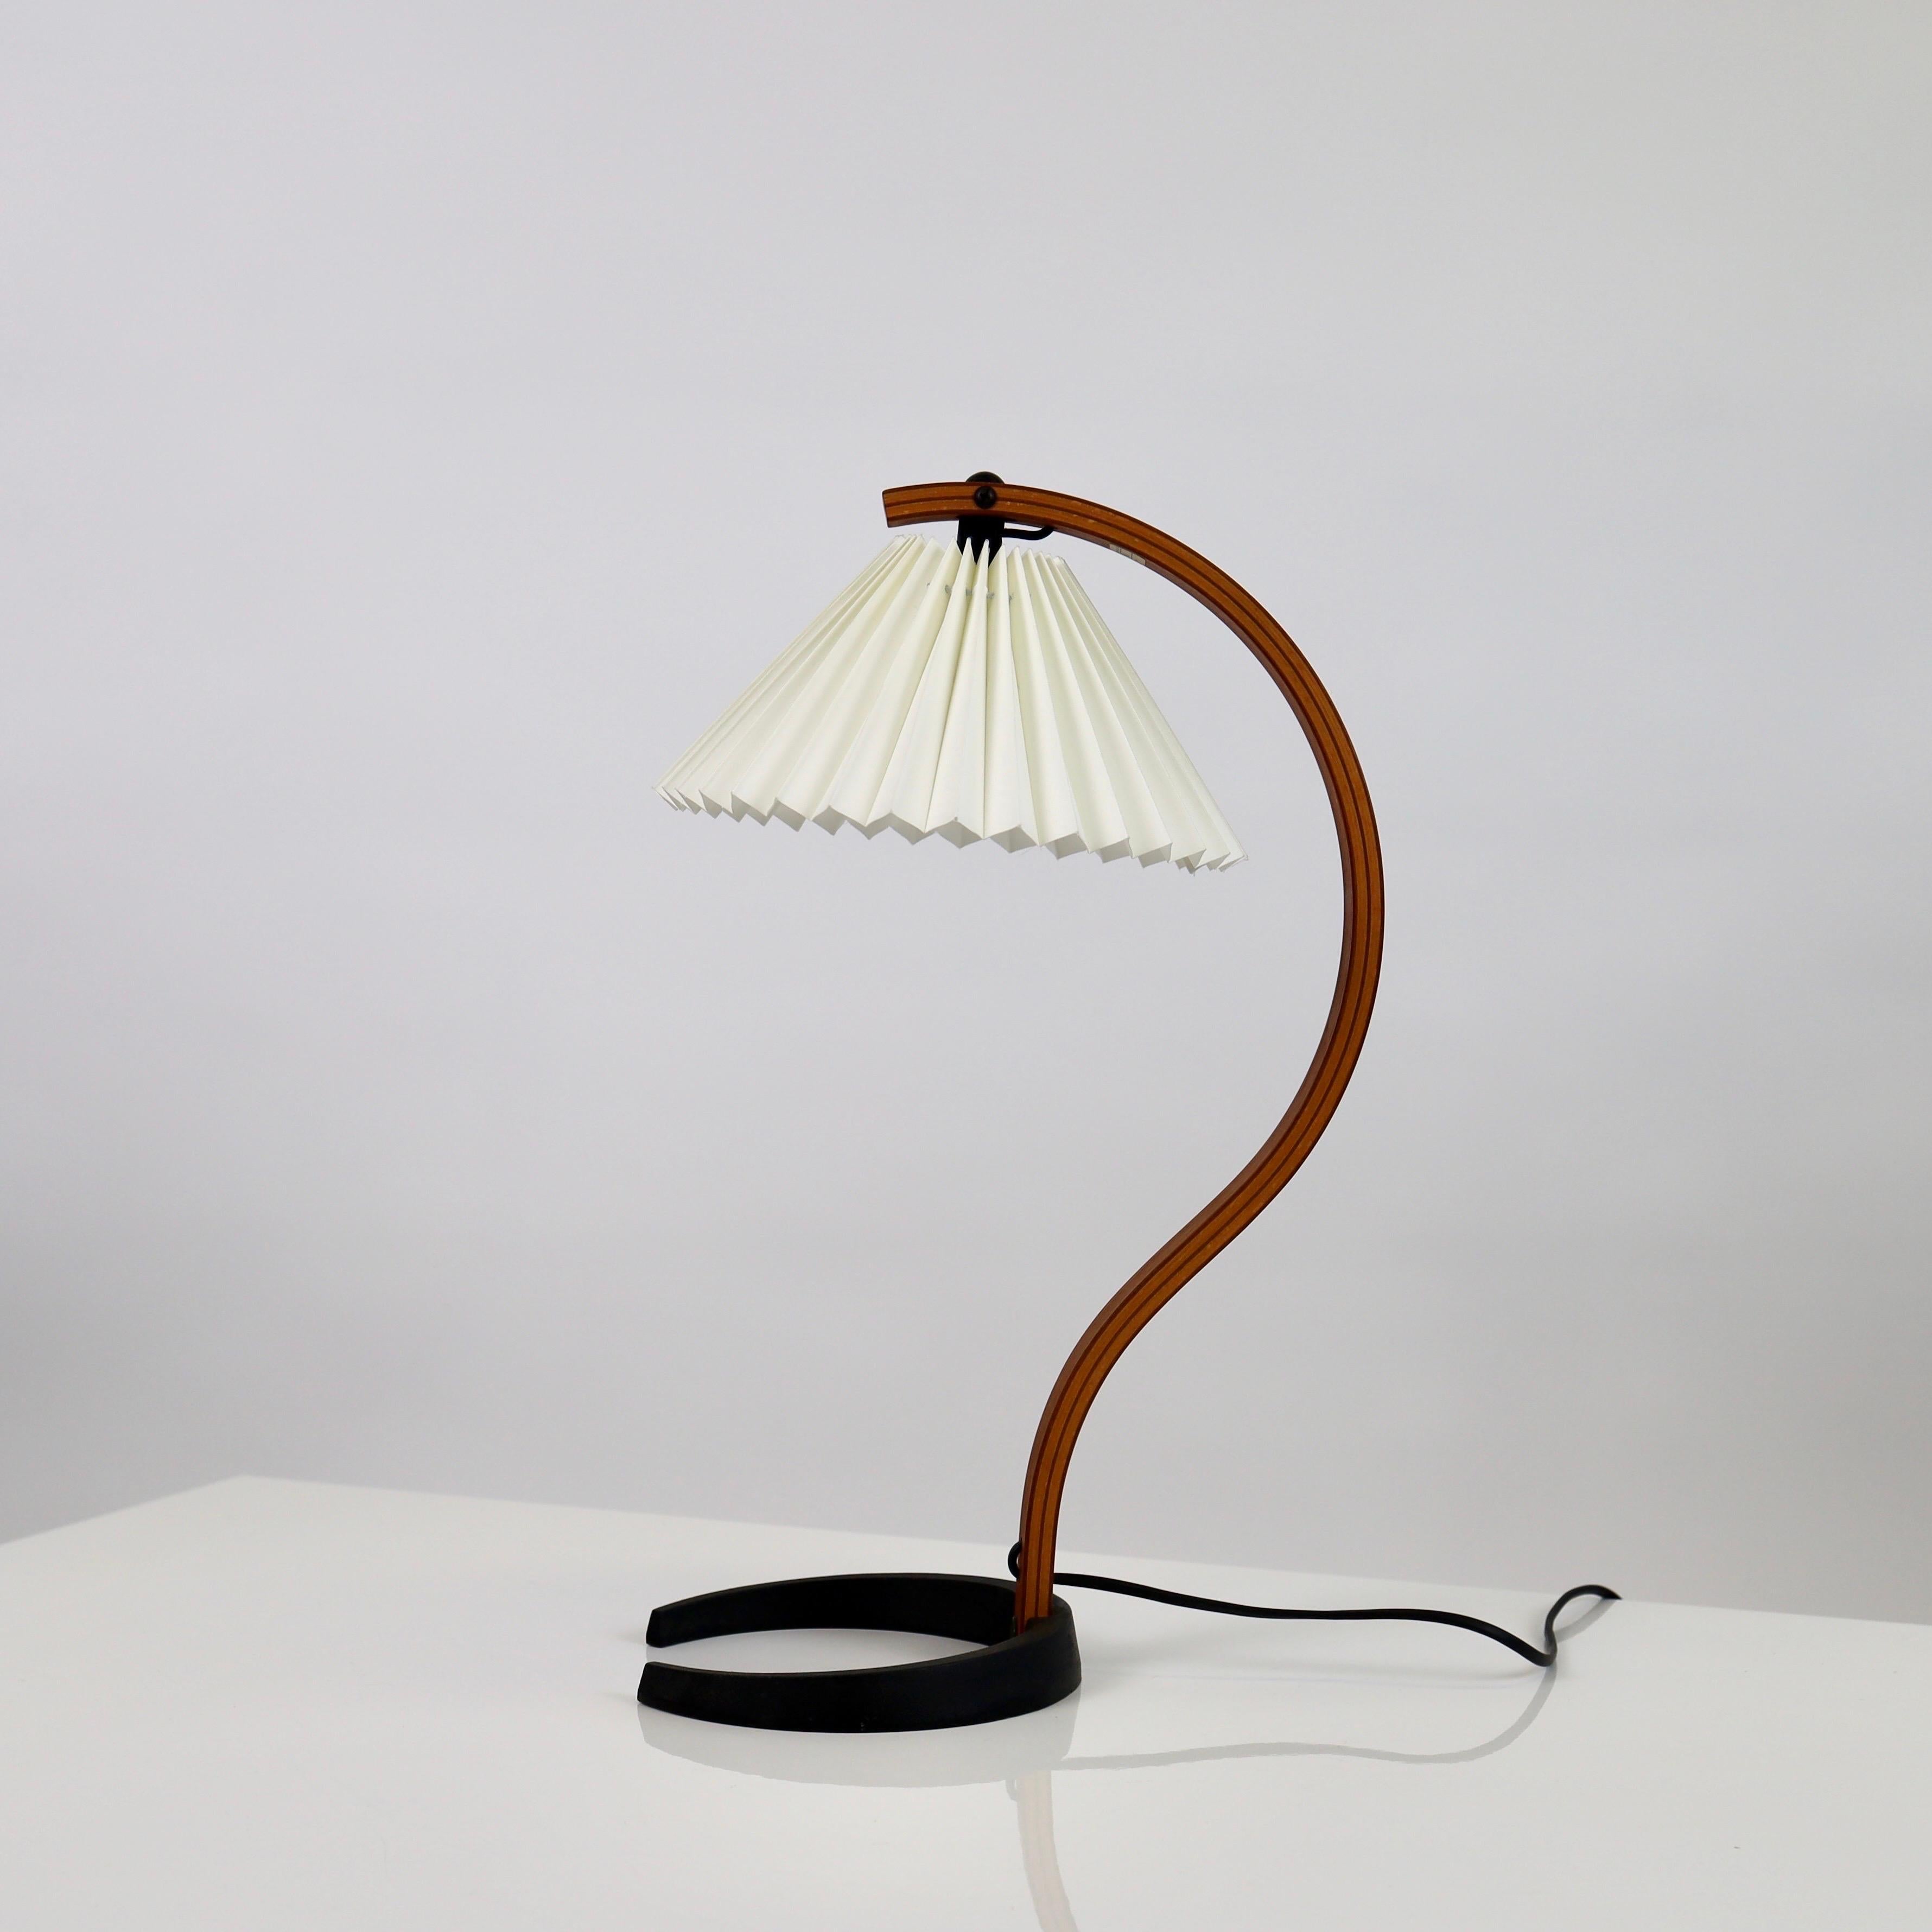 caprani table lamp